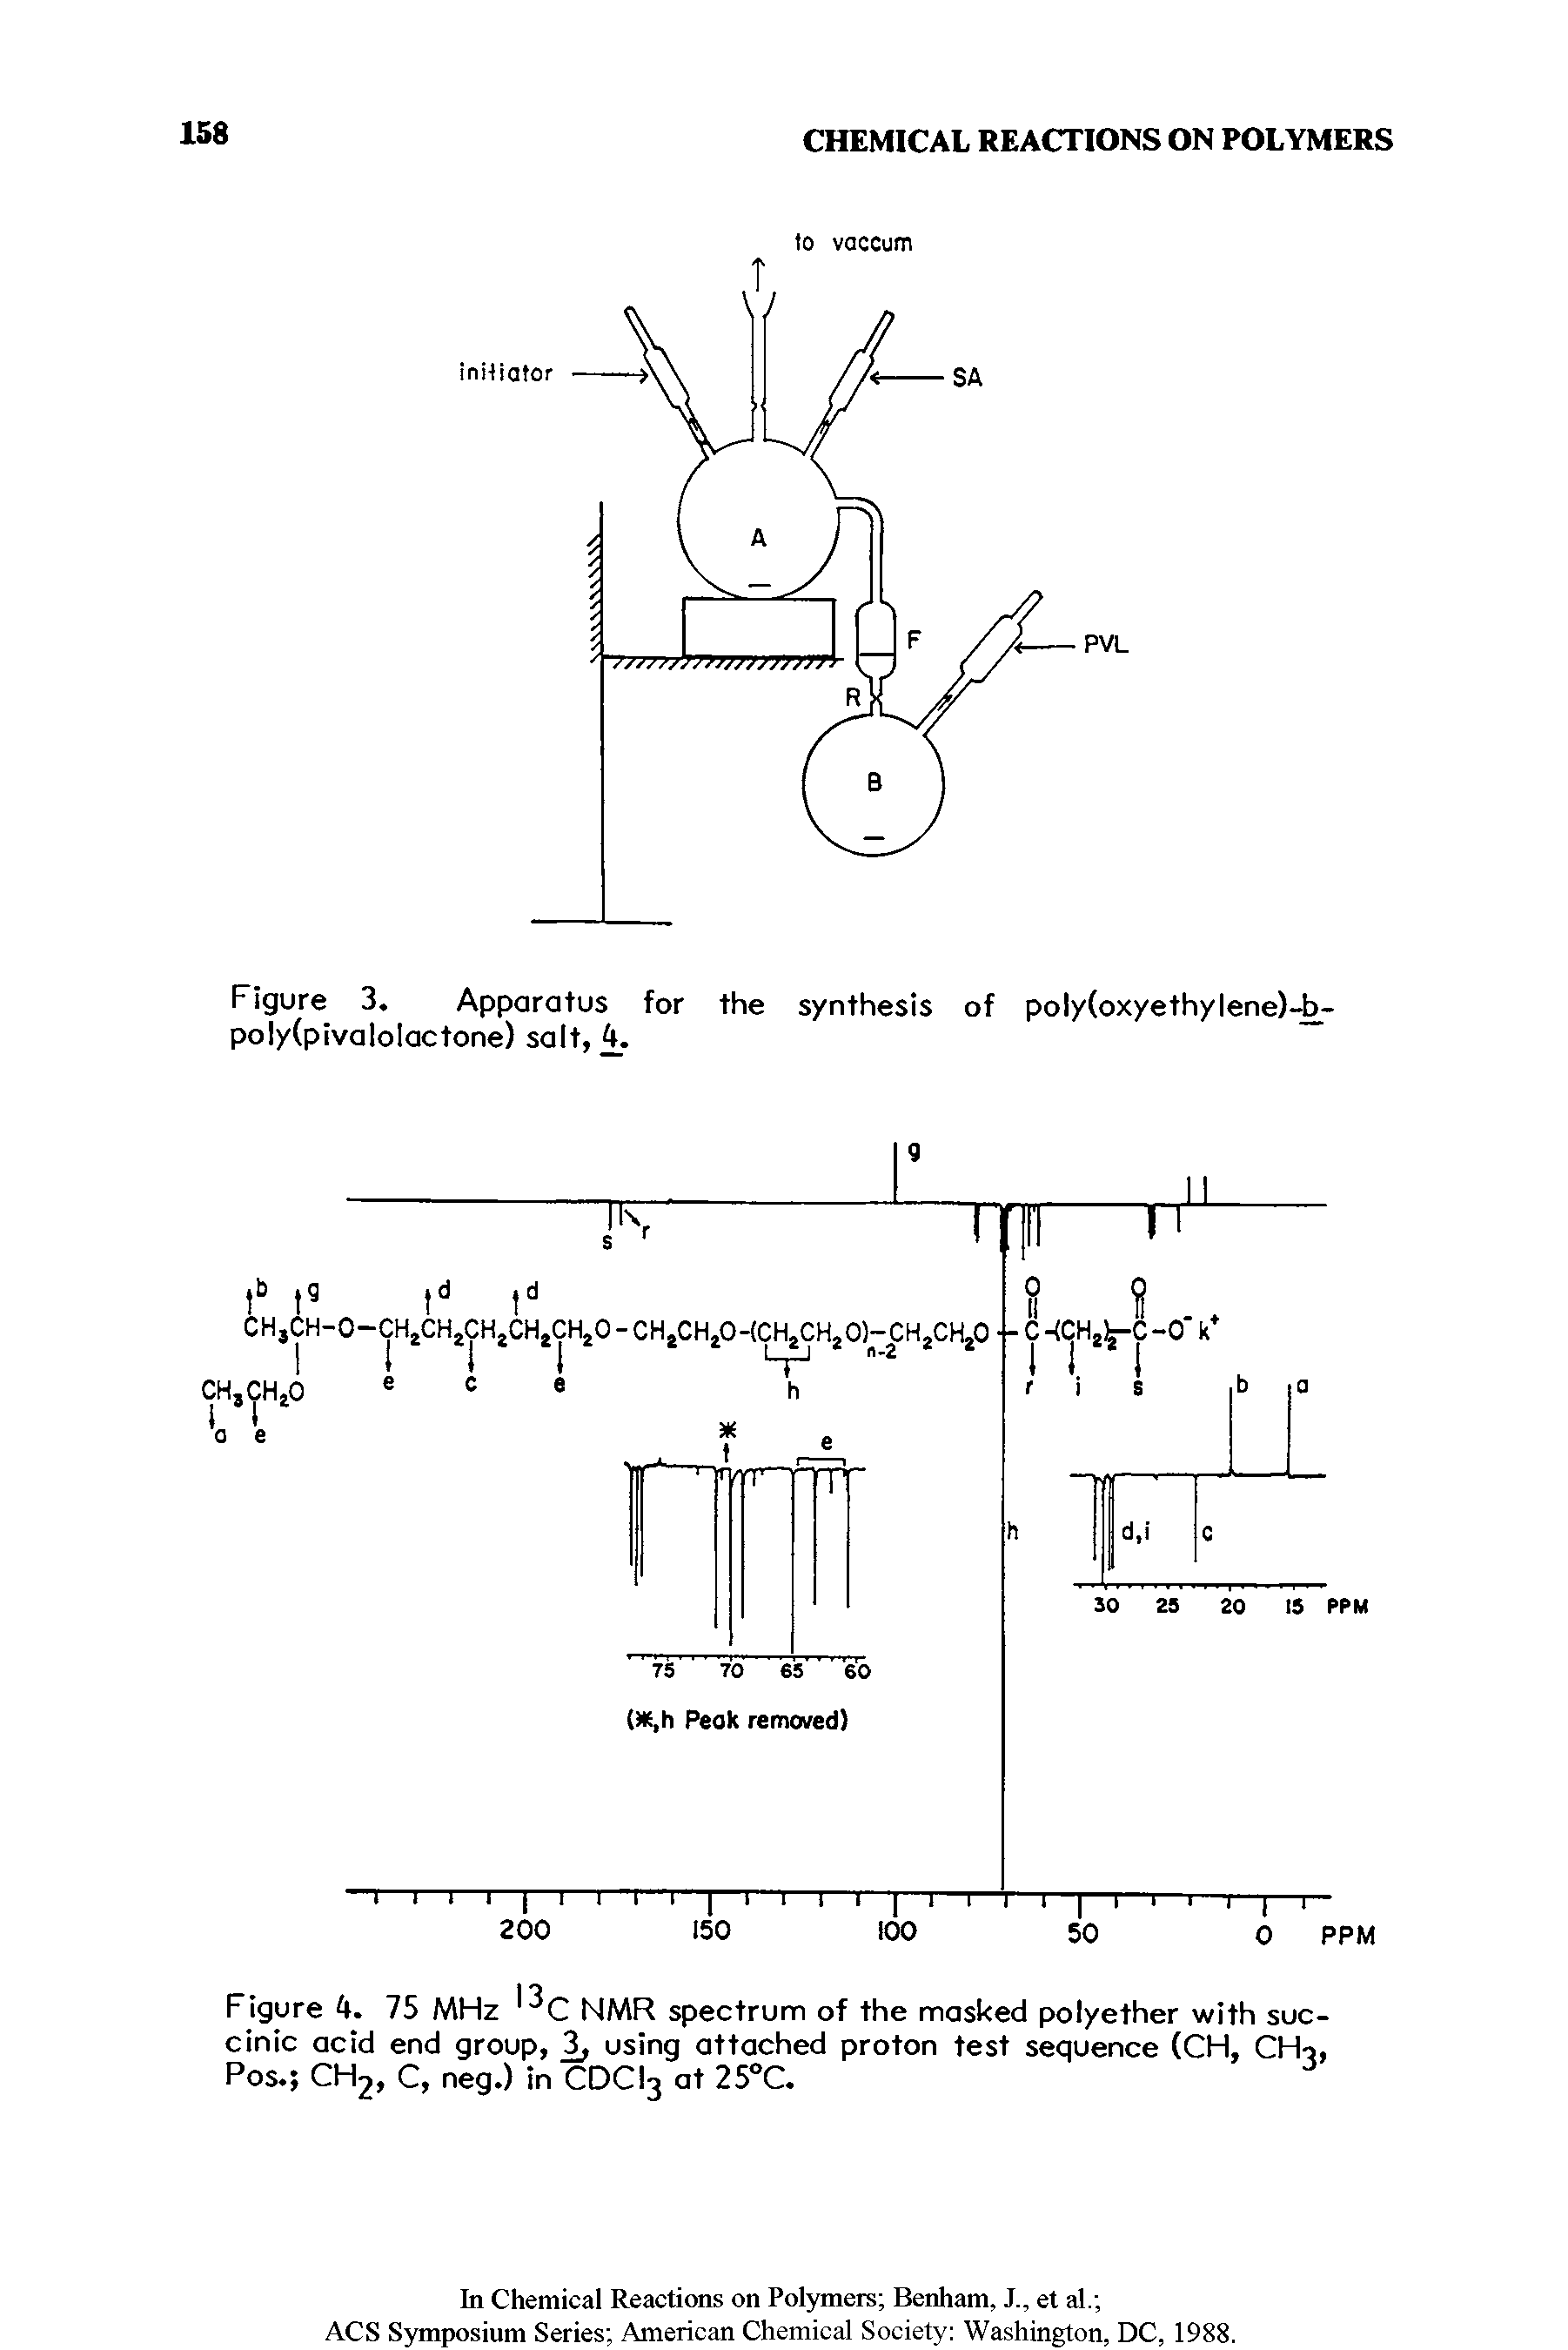 Figure 3. Apparatus for the synthesis of poly(oxyethylene)-b-poly(pivalolactone) salt, k.